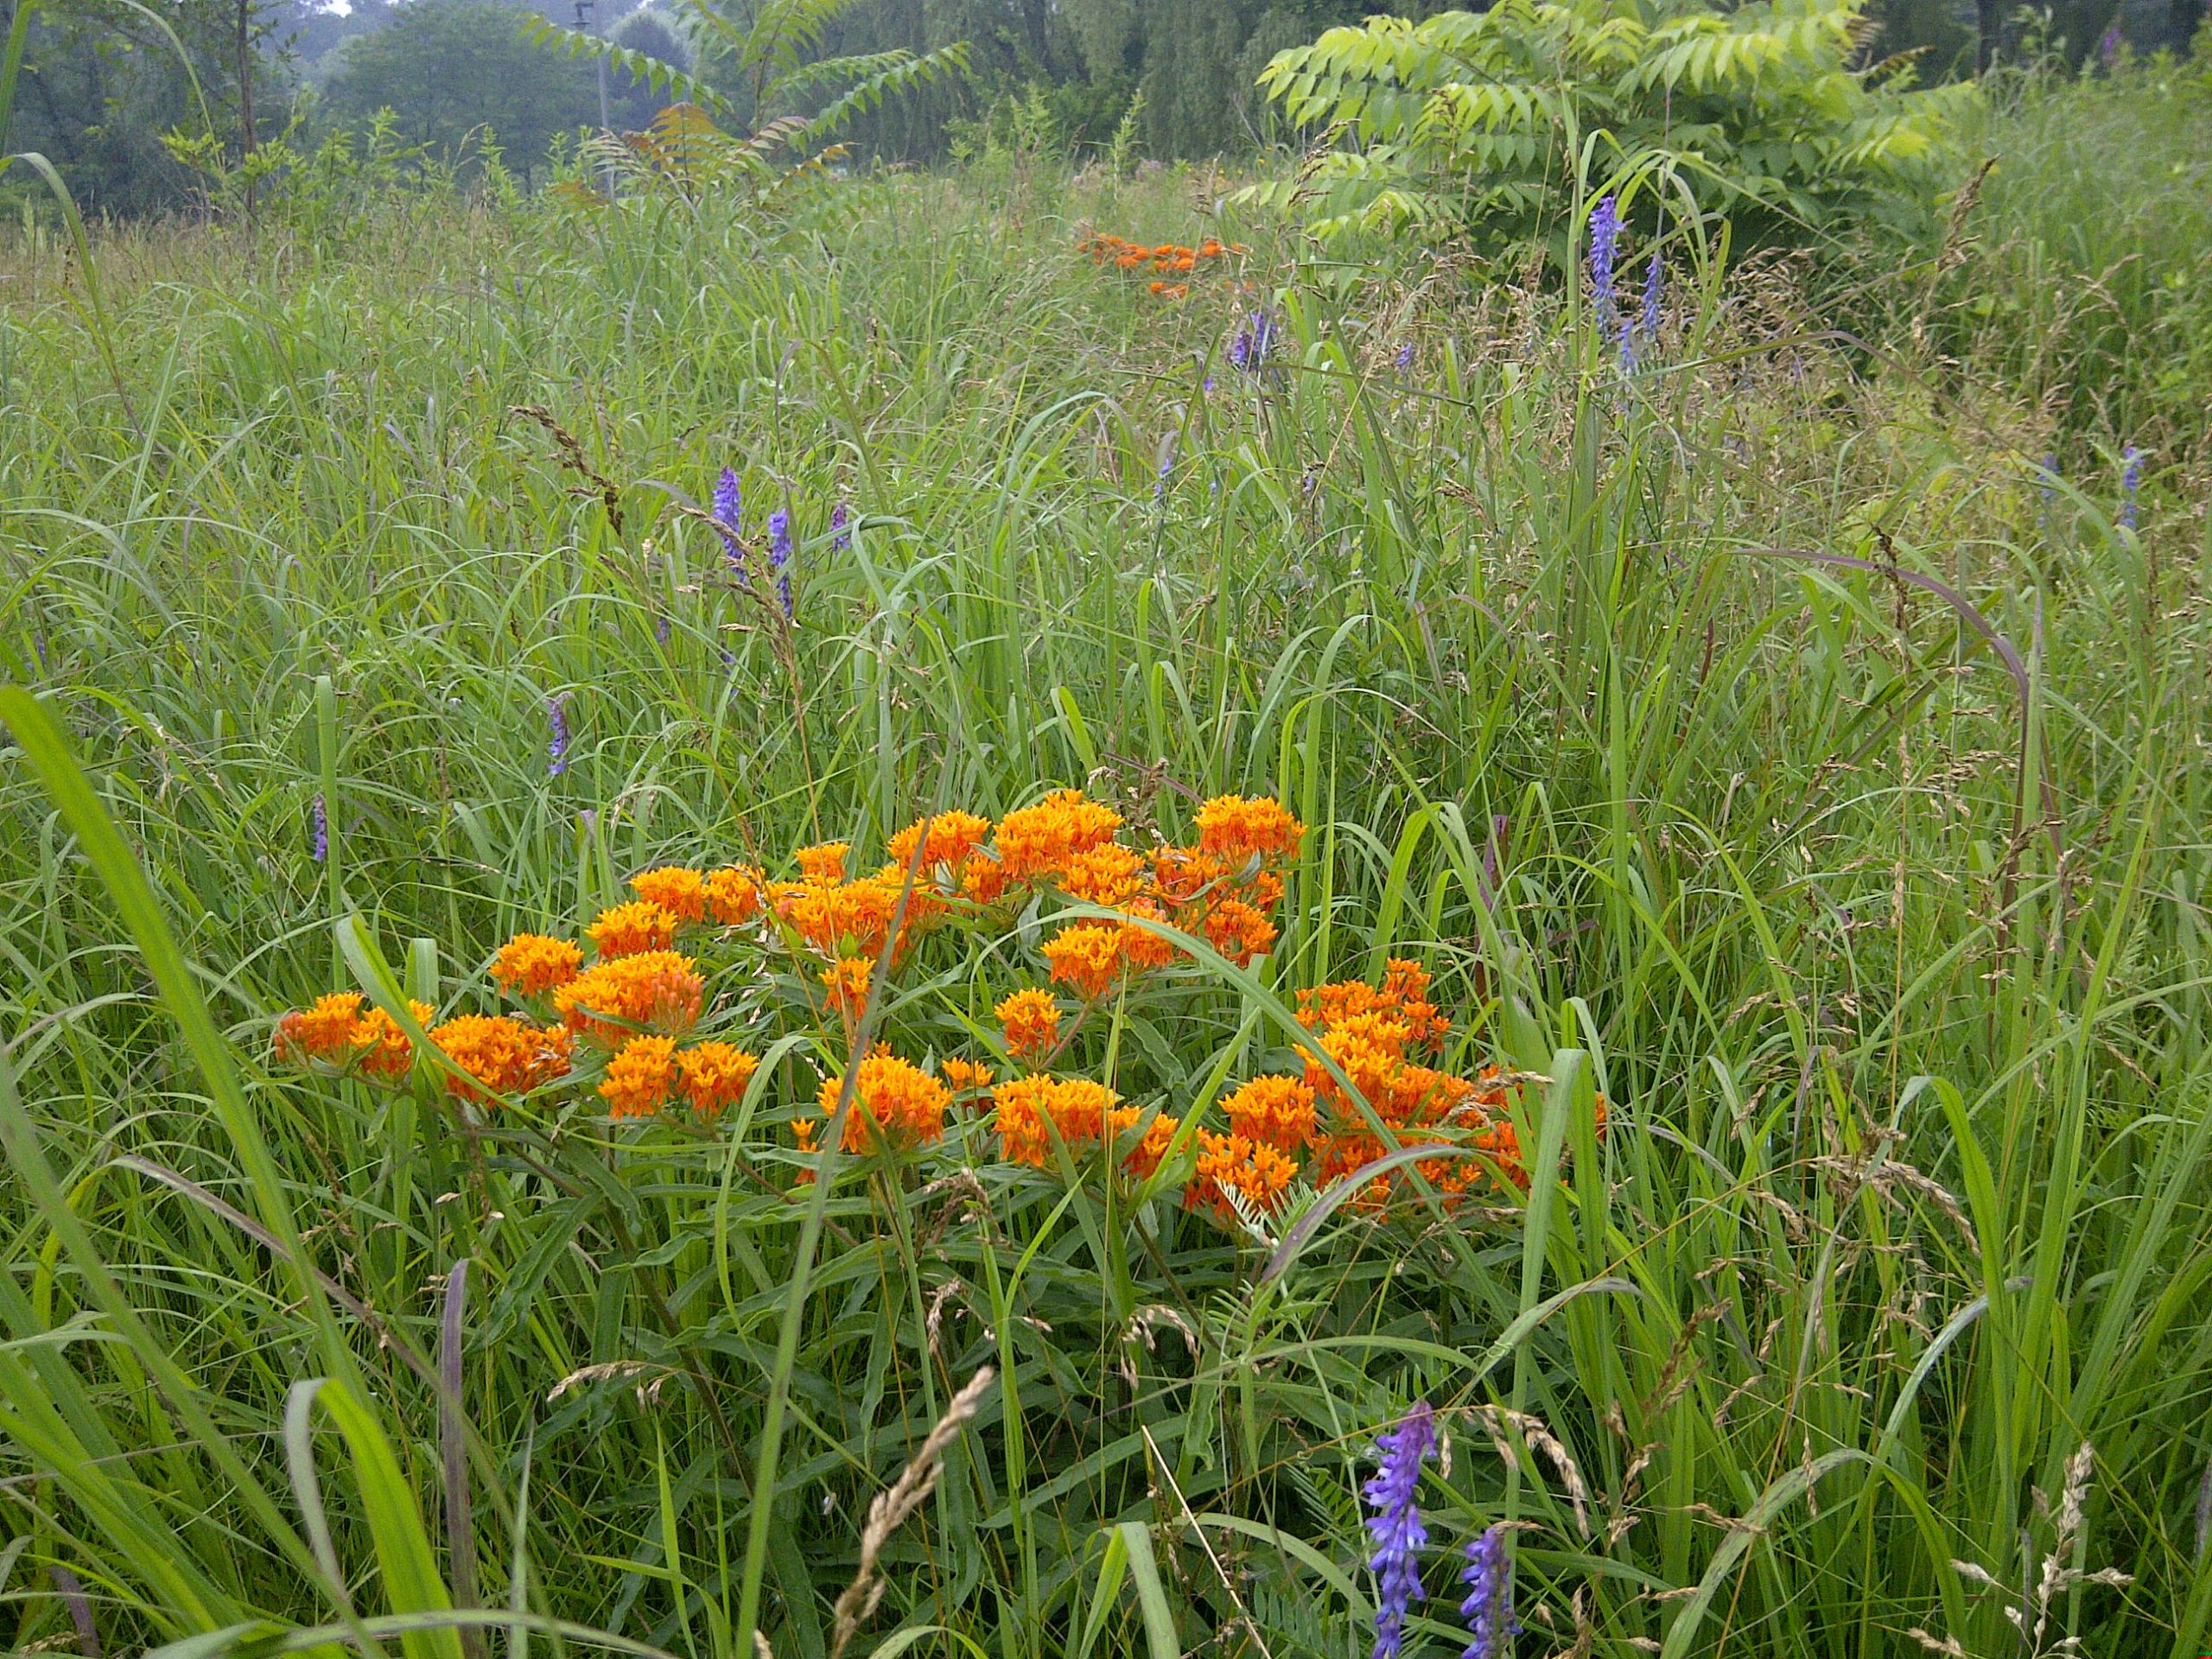 Tall grass prairie with orange flowers